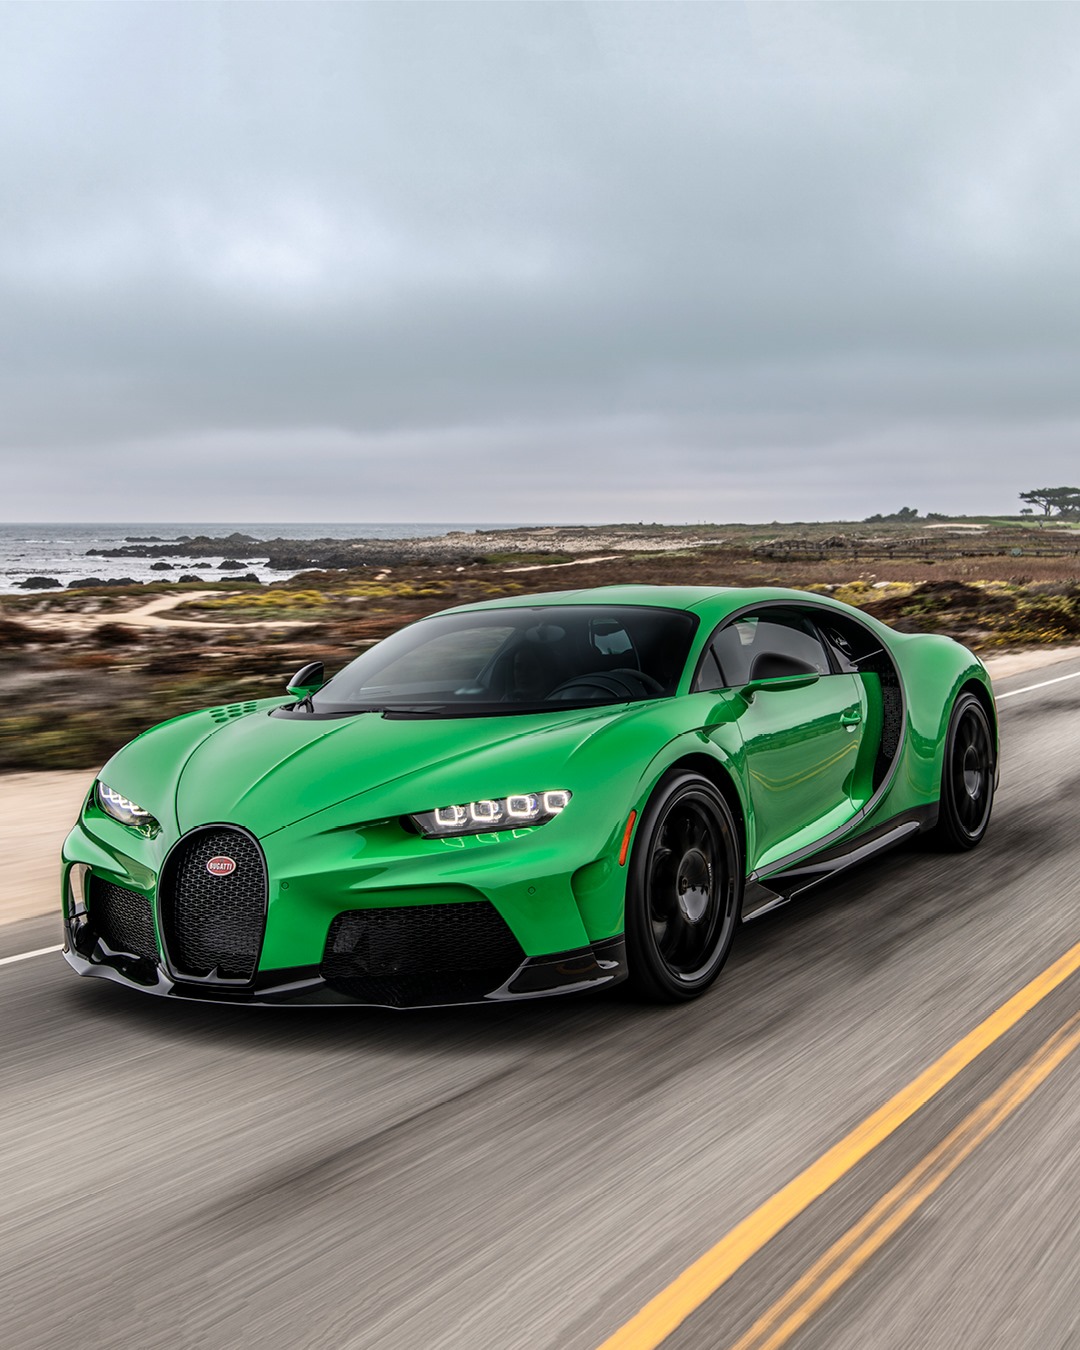 Bugatti Presented In A Luminous Viper Green Finish